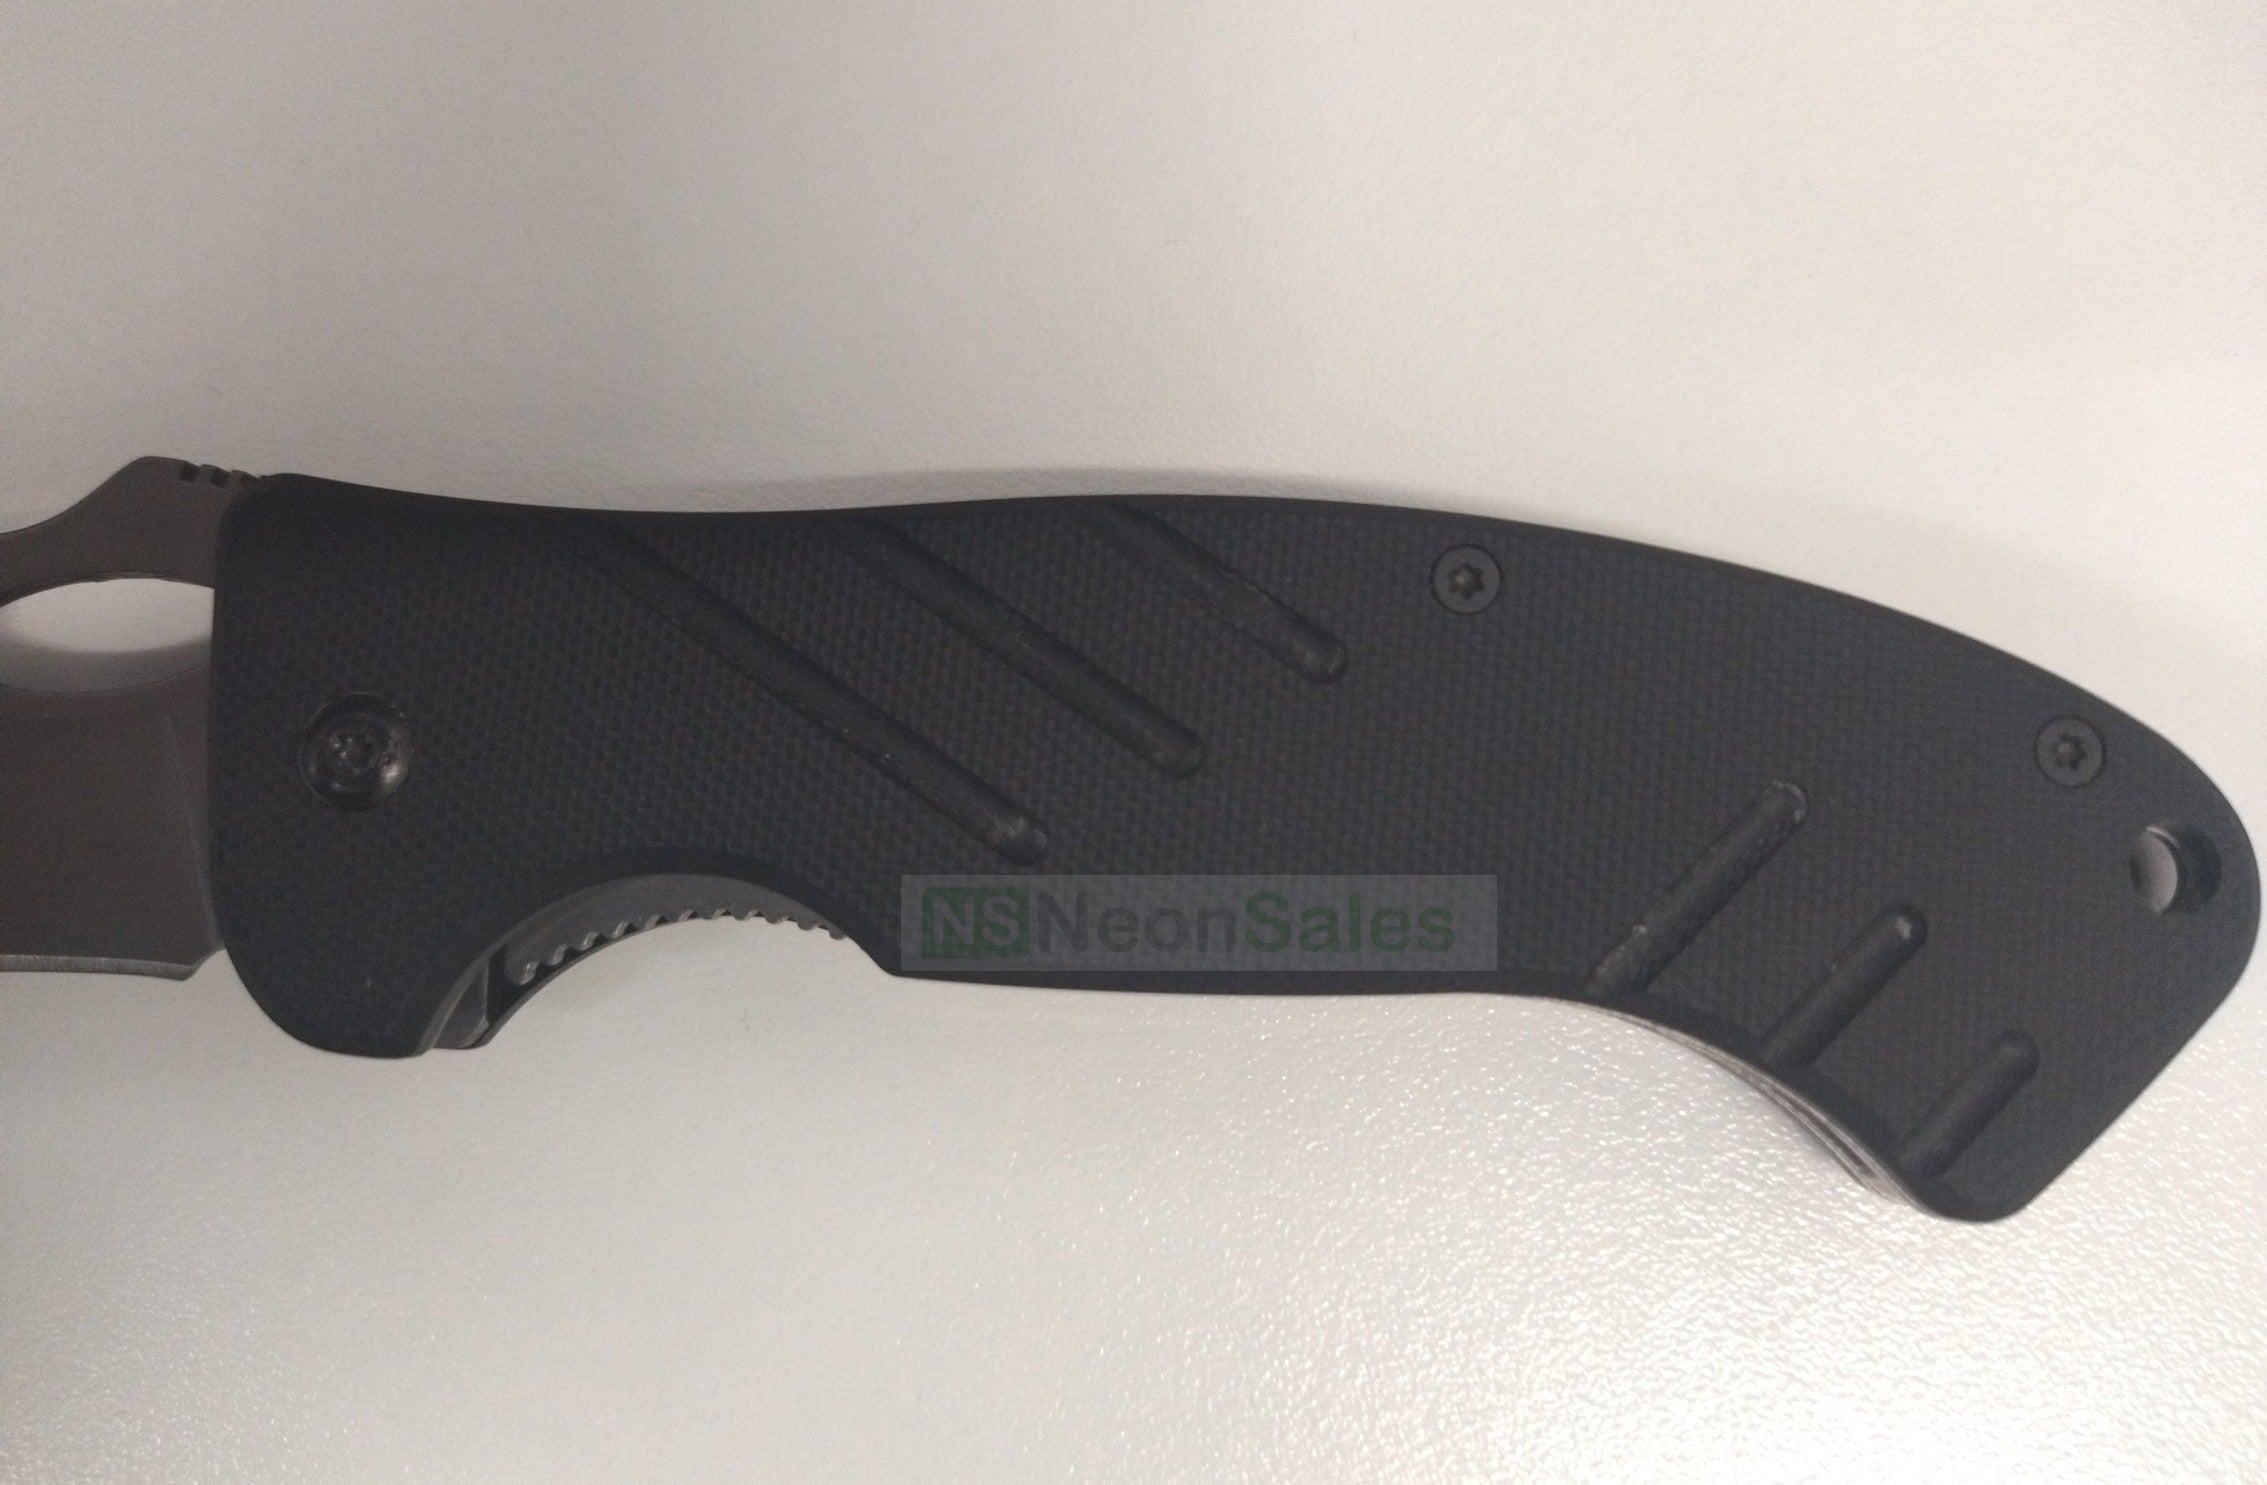 BUFFALO RIVER MAXIM FOLDER KNIFE 4.5" - BLACK